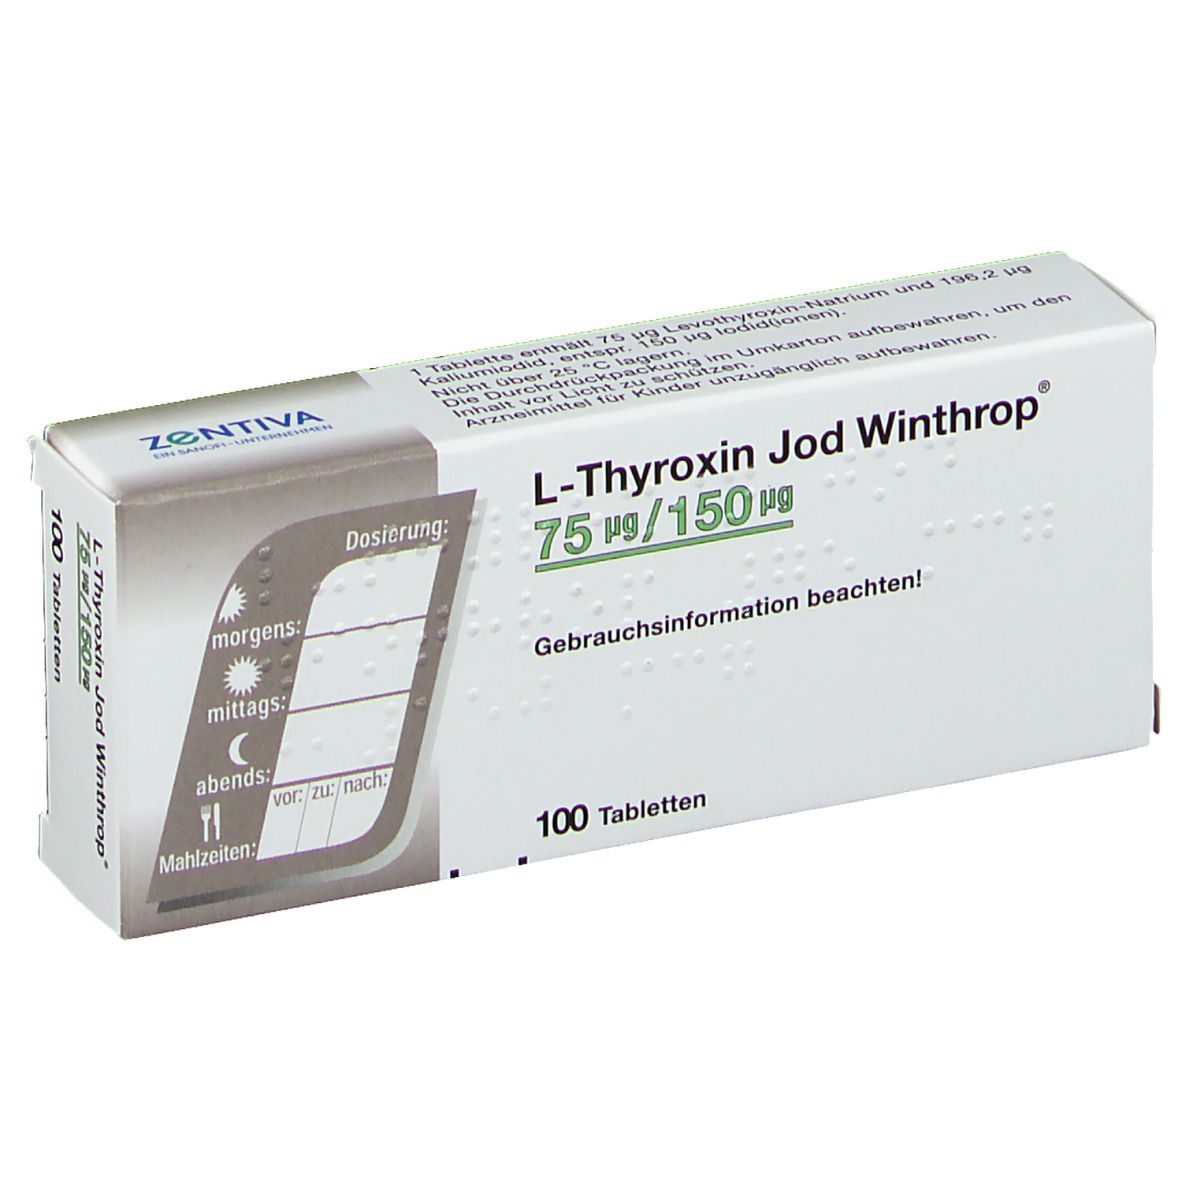 L-Thyroxin Jod Winthrop® 75 µg/150 µg